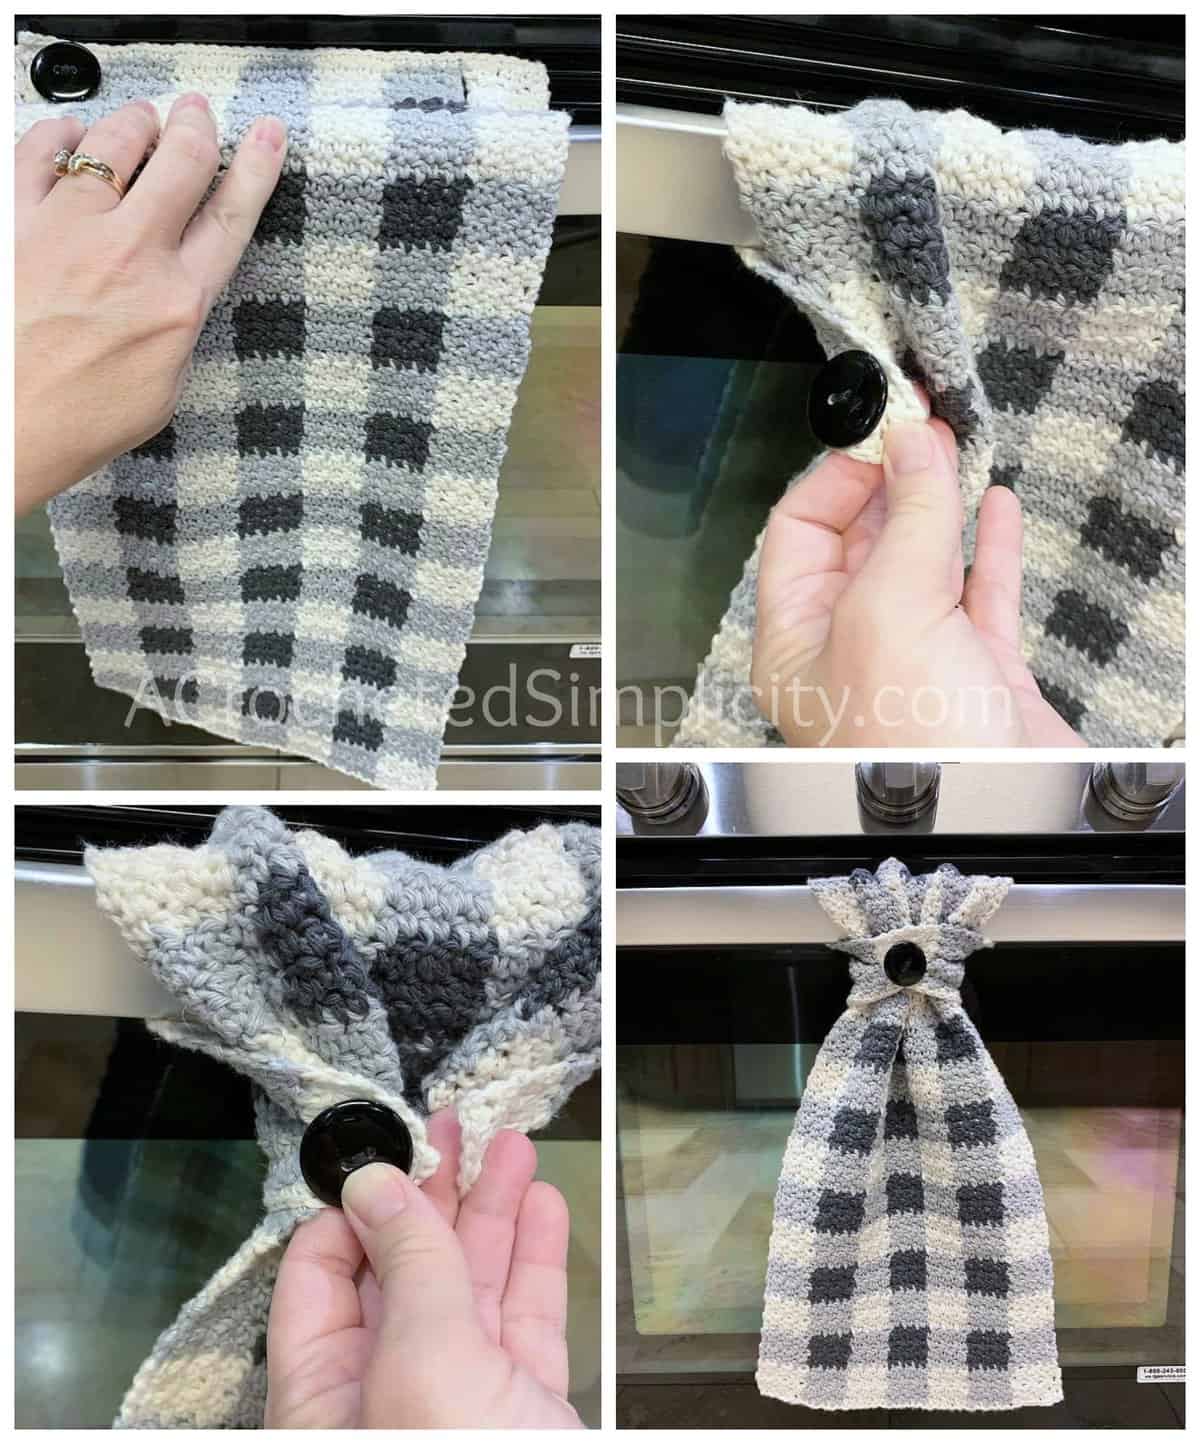 Buffalo Plaid Kitchen Towel - Free Crochet Towel Pattern - A Crocheted  Simplicity